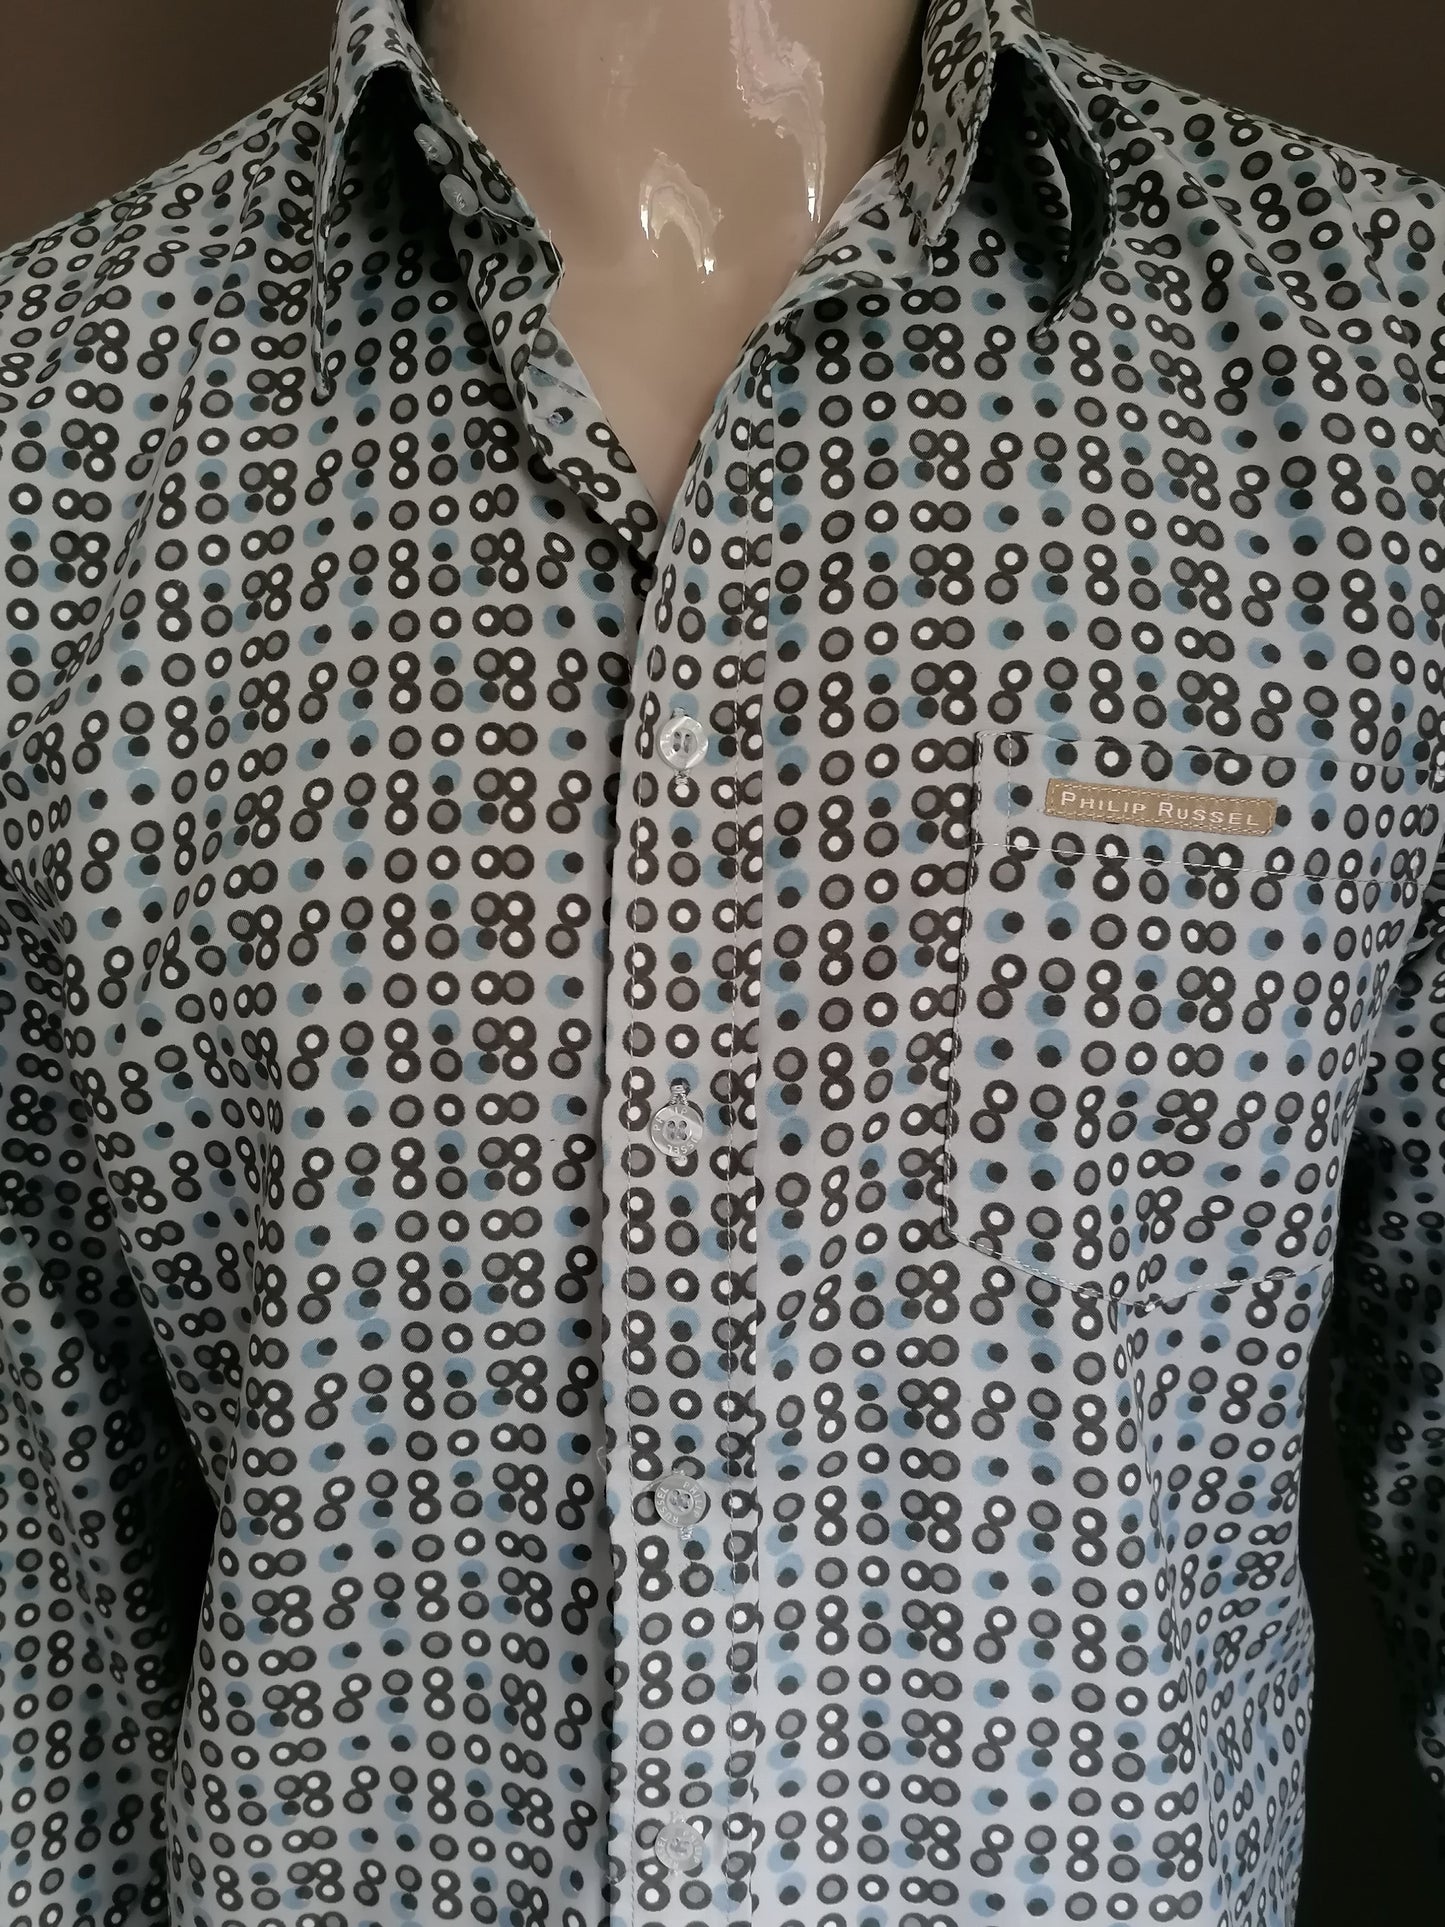 Camisa de Philip Russel. Impresión azul gris. Tamaño L. 100% poliéster